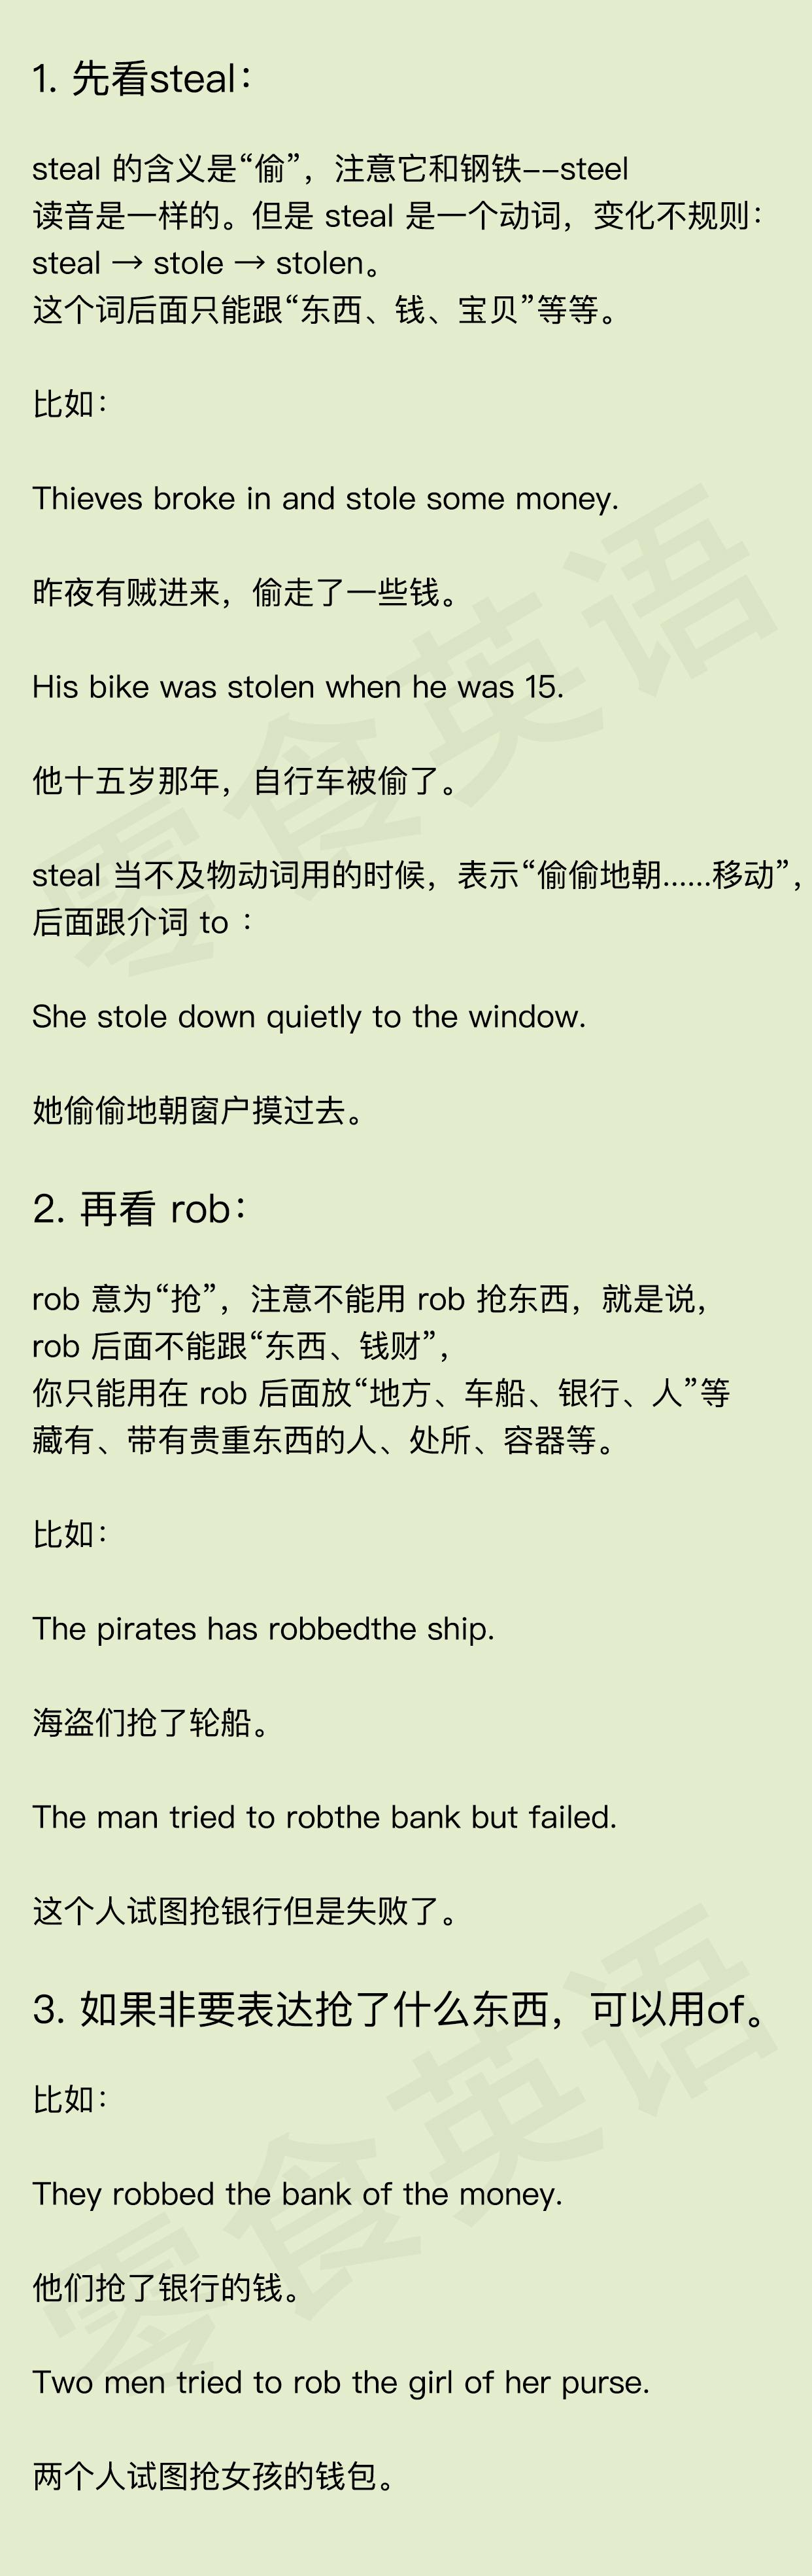 steal 和 rob，分别是“偷”和“抢”，但是宾语有讲究  第2张